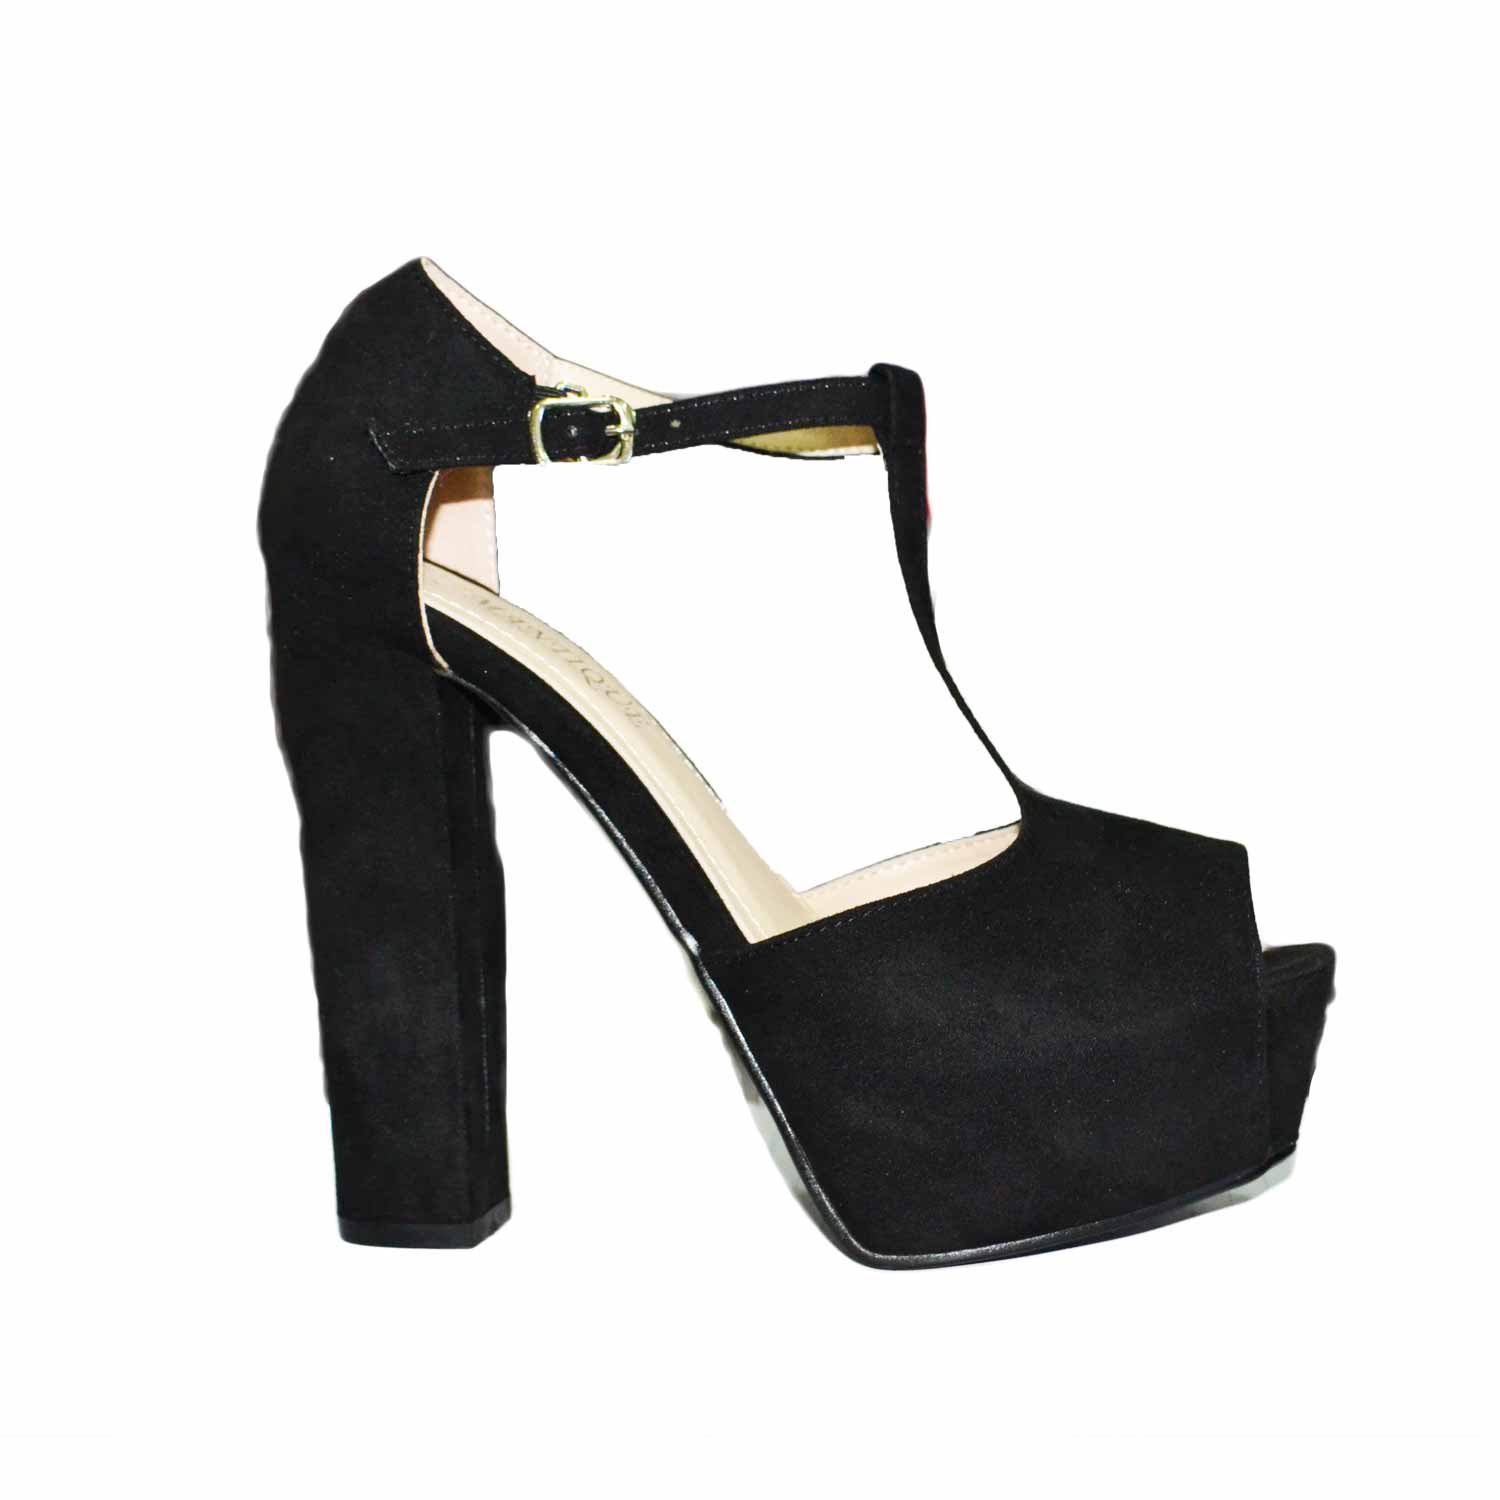 Scarpe donna tacco largo comodo camoscio nero con cinturino donna sandali  tacco malu shoes | MaluShoes